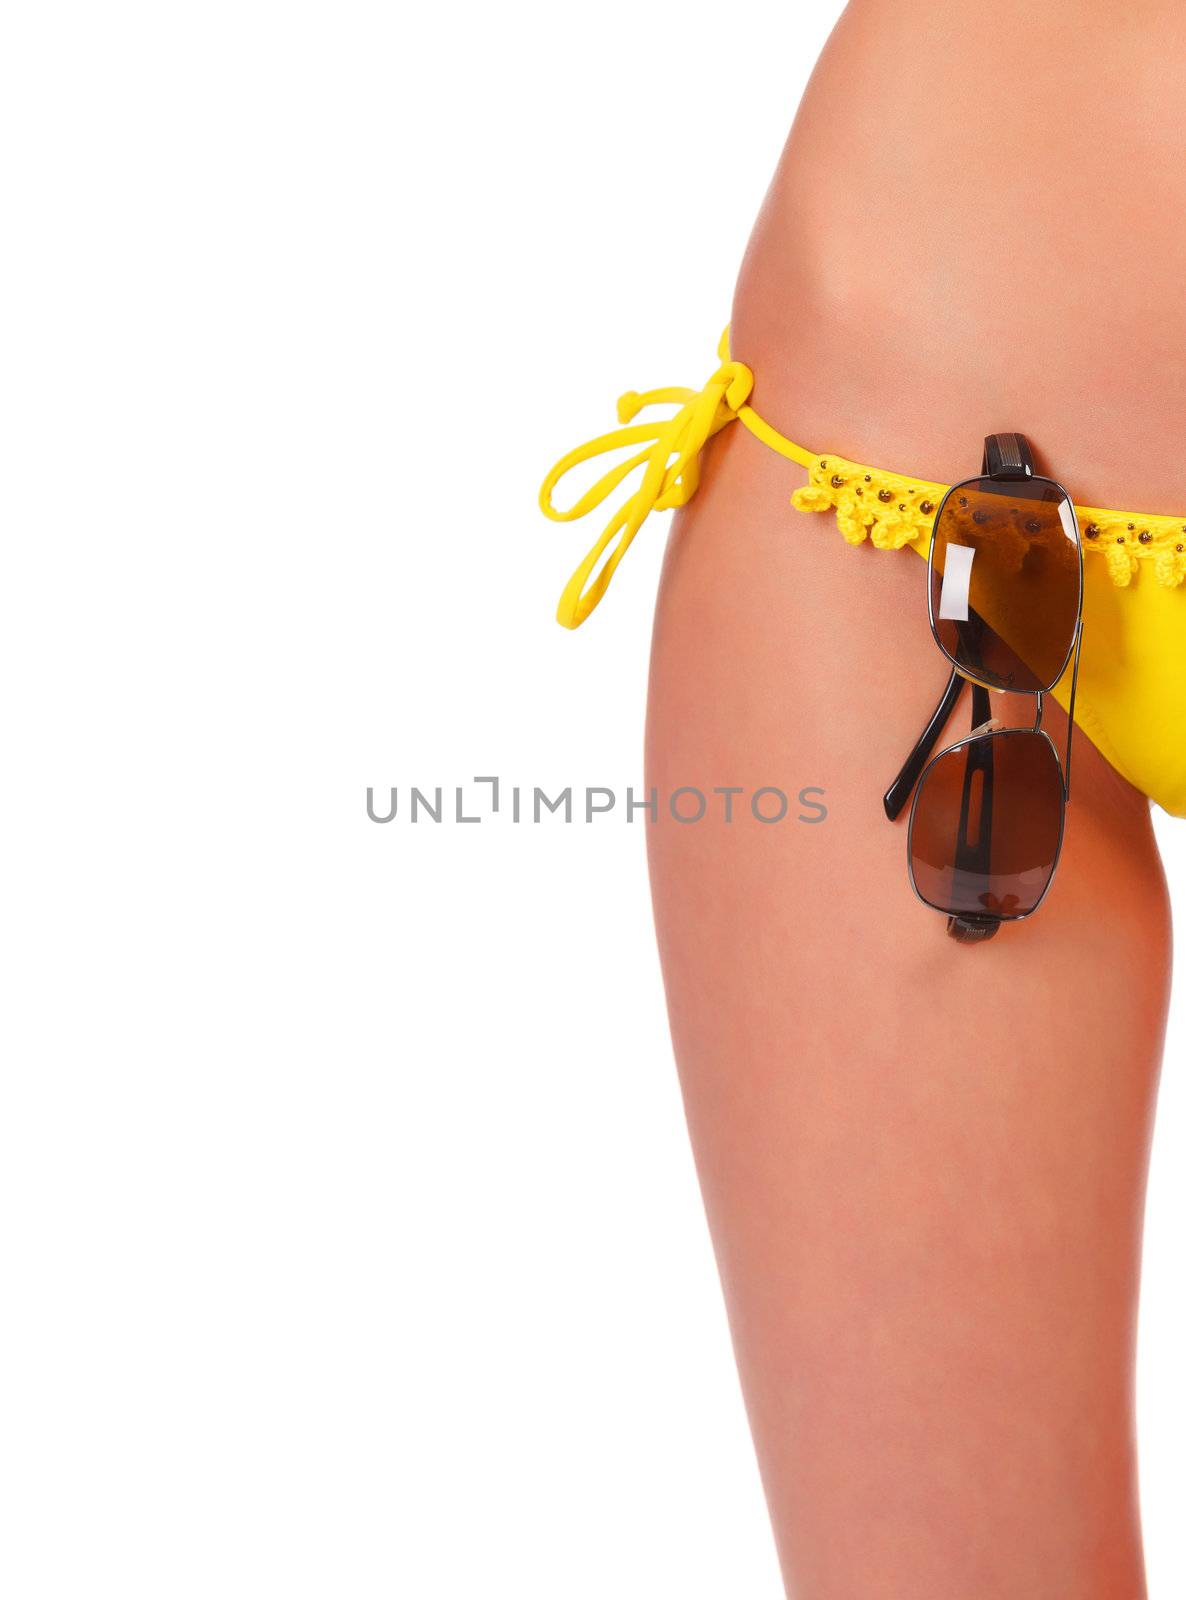 tanned woman body in bikini by Nobilior